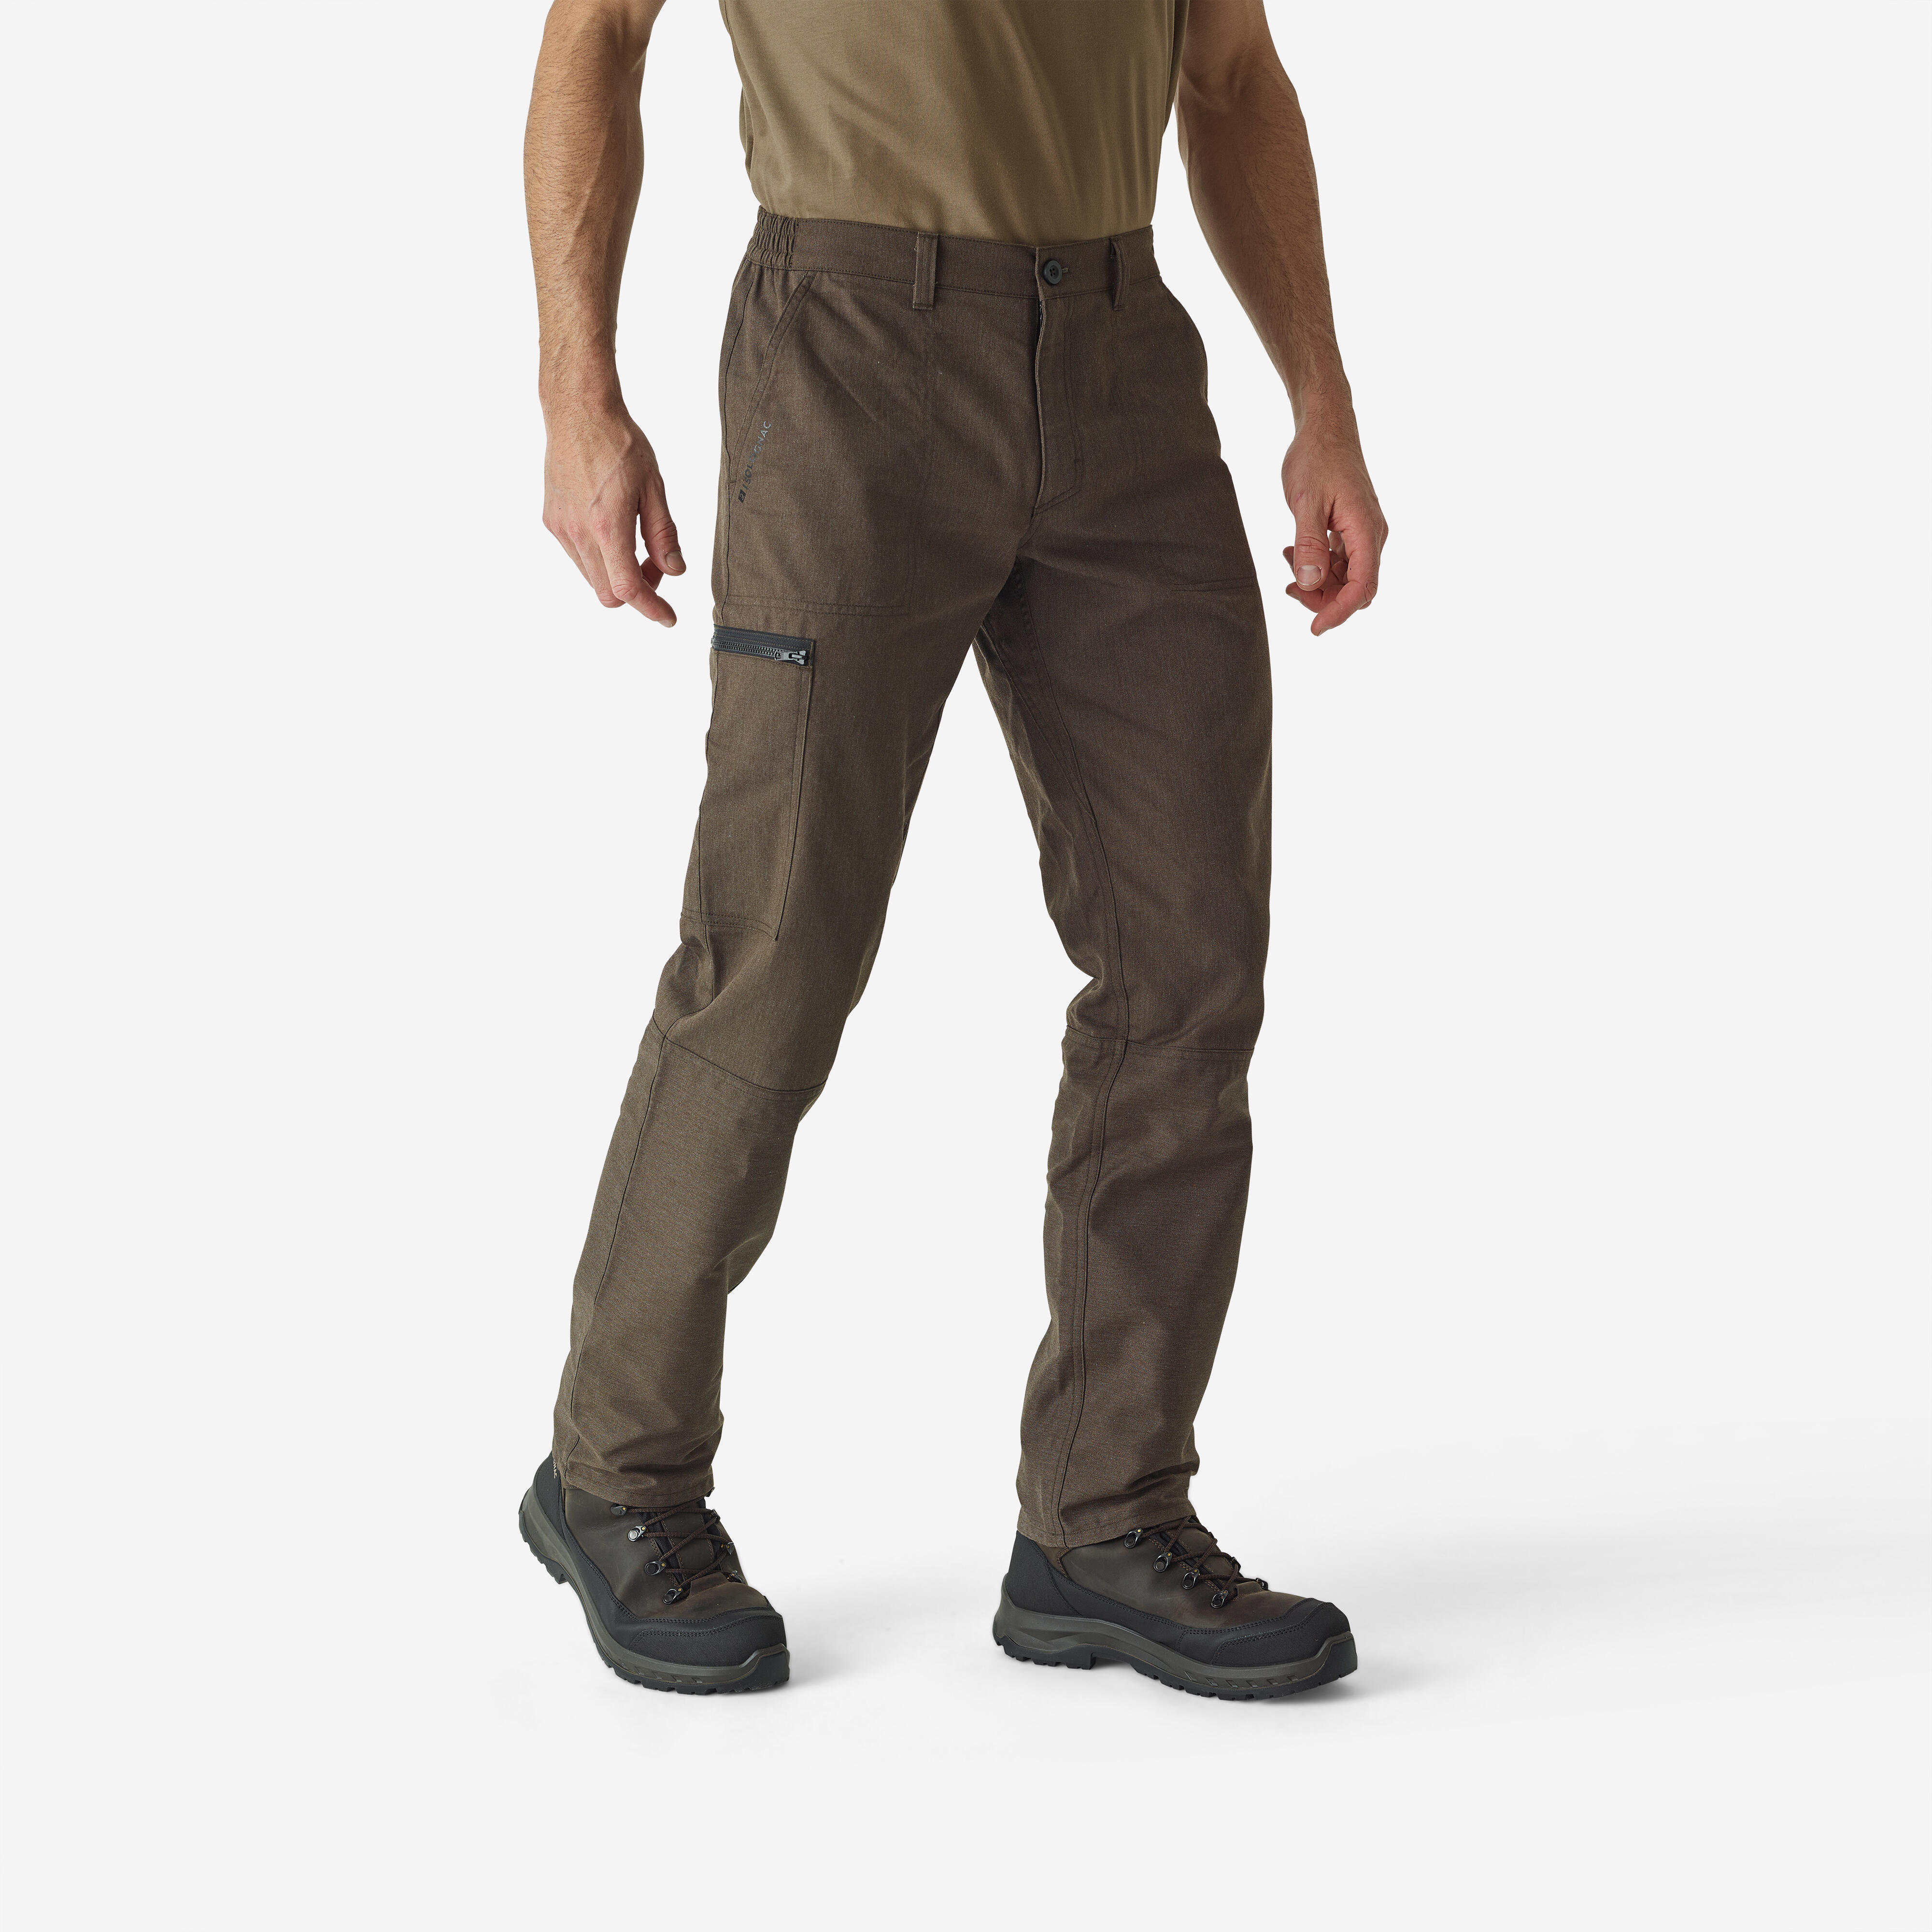 Decathlon Green Pants Styles, Prices - Trendyol